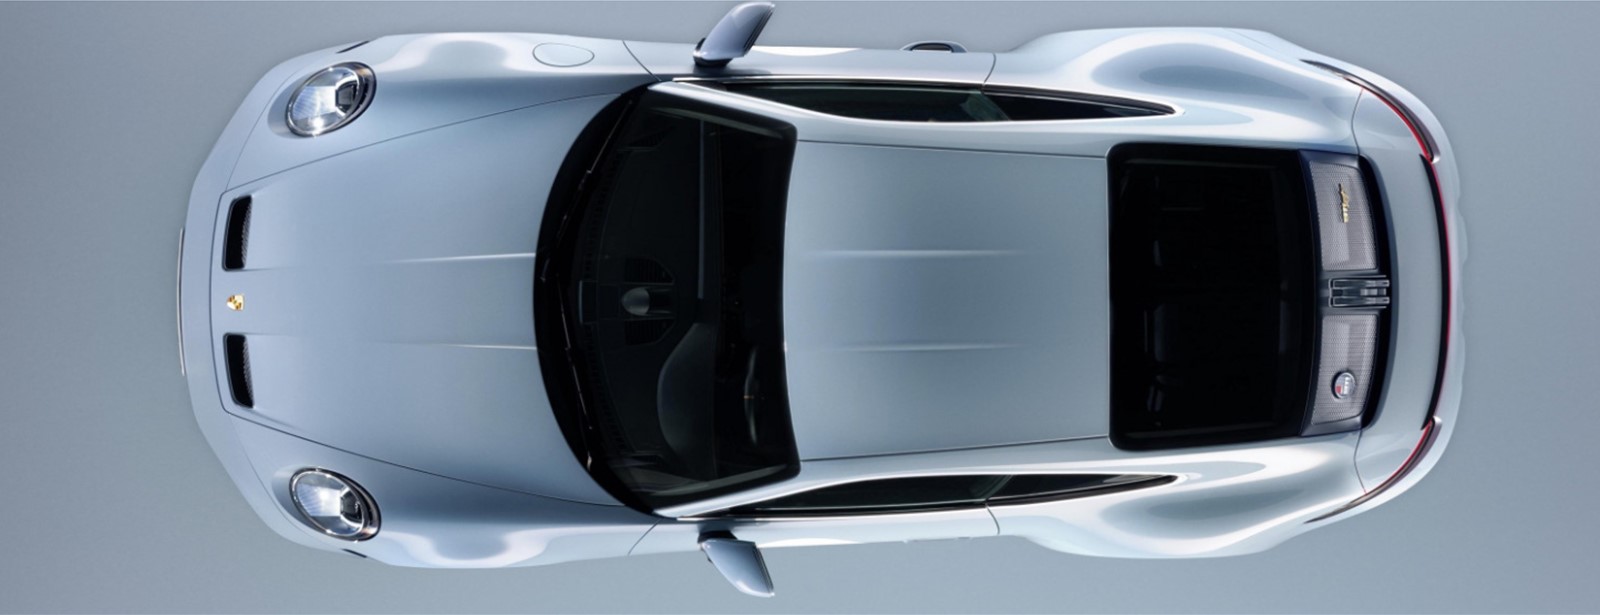 Porsche AG lanceert meer modellen dan ooit in 2024 vanuit sterke basis.